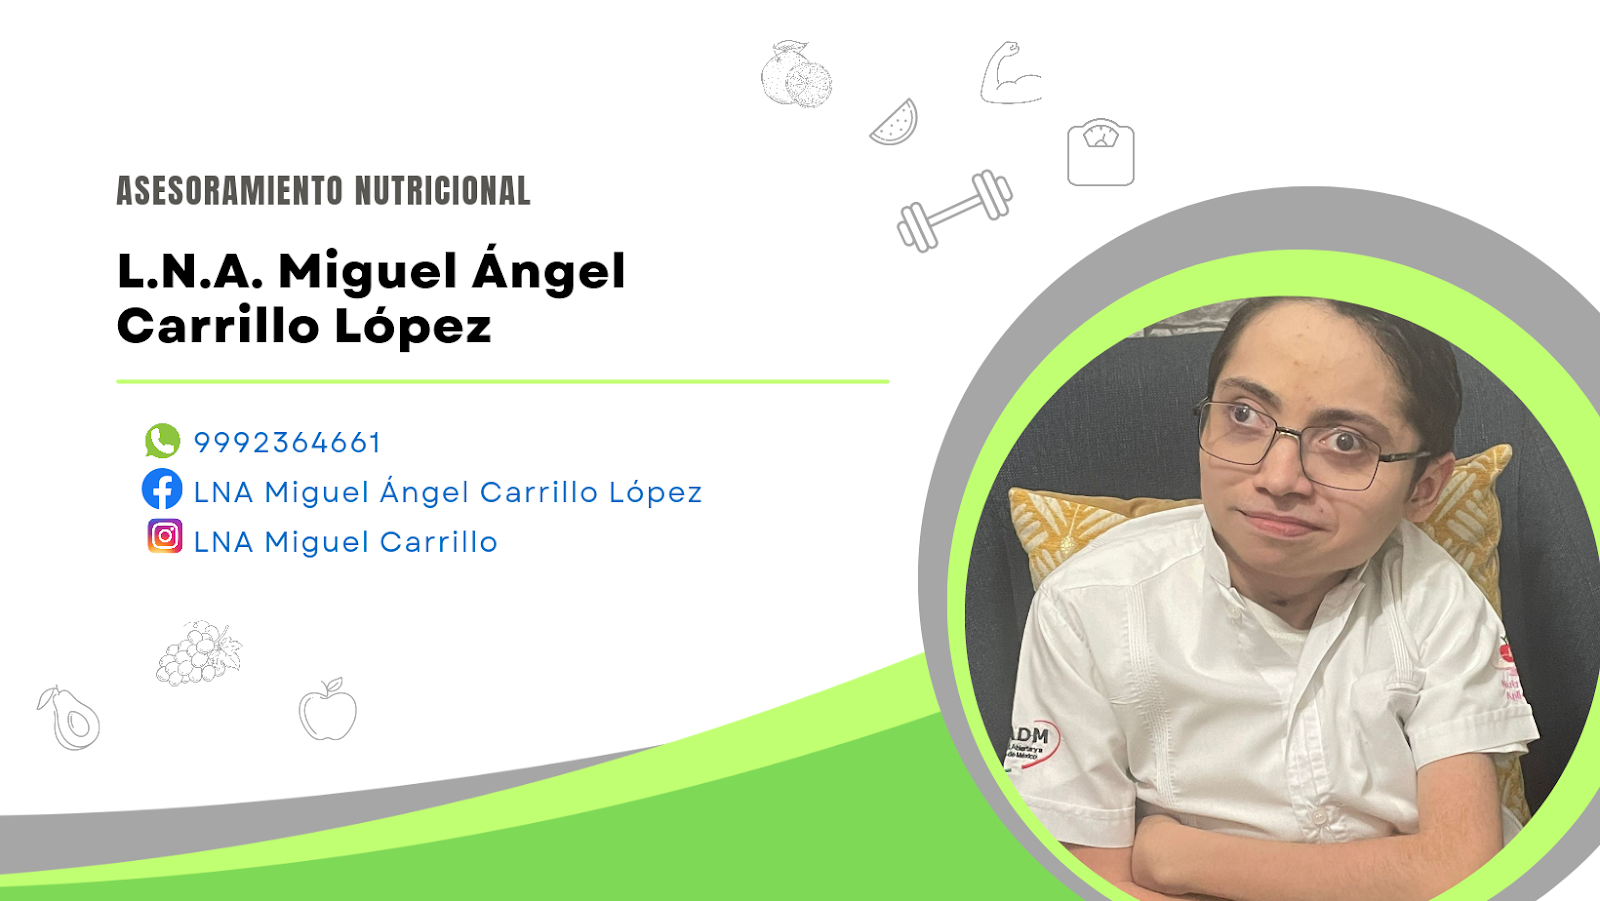 L.N.A. Miguel Ángel Carrillo López 